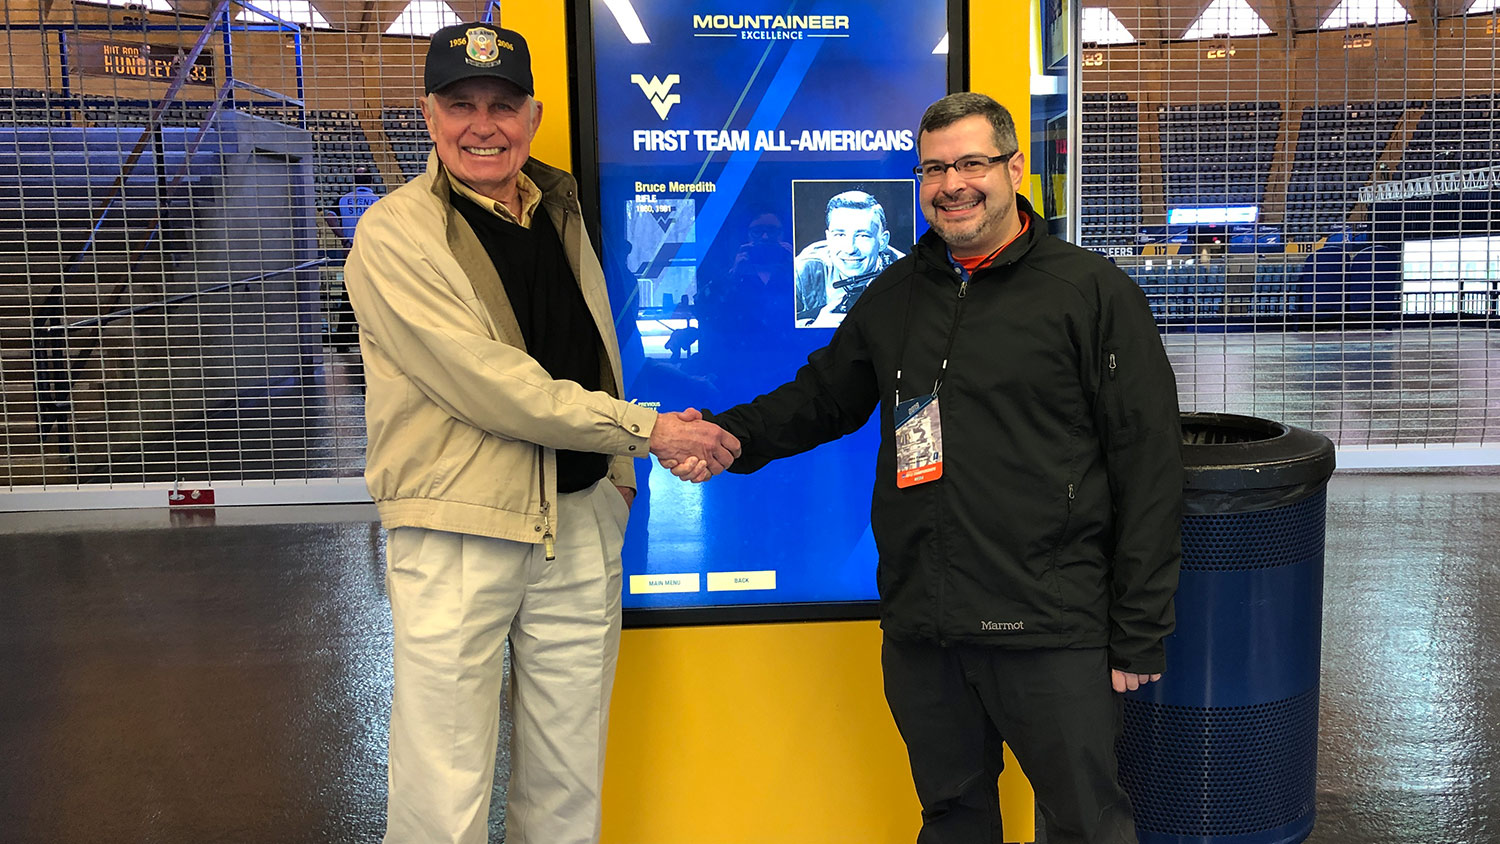 Bruce Meredith and John Parker, WVU alumni at 2019 NCAA Rifle Championship at the WVU Coliseum.